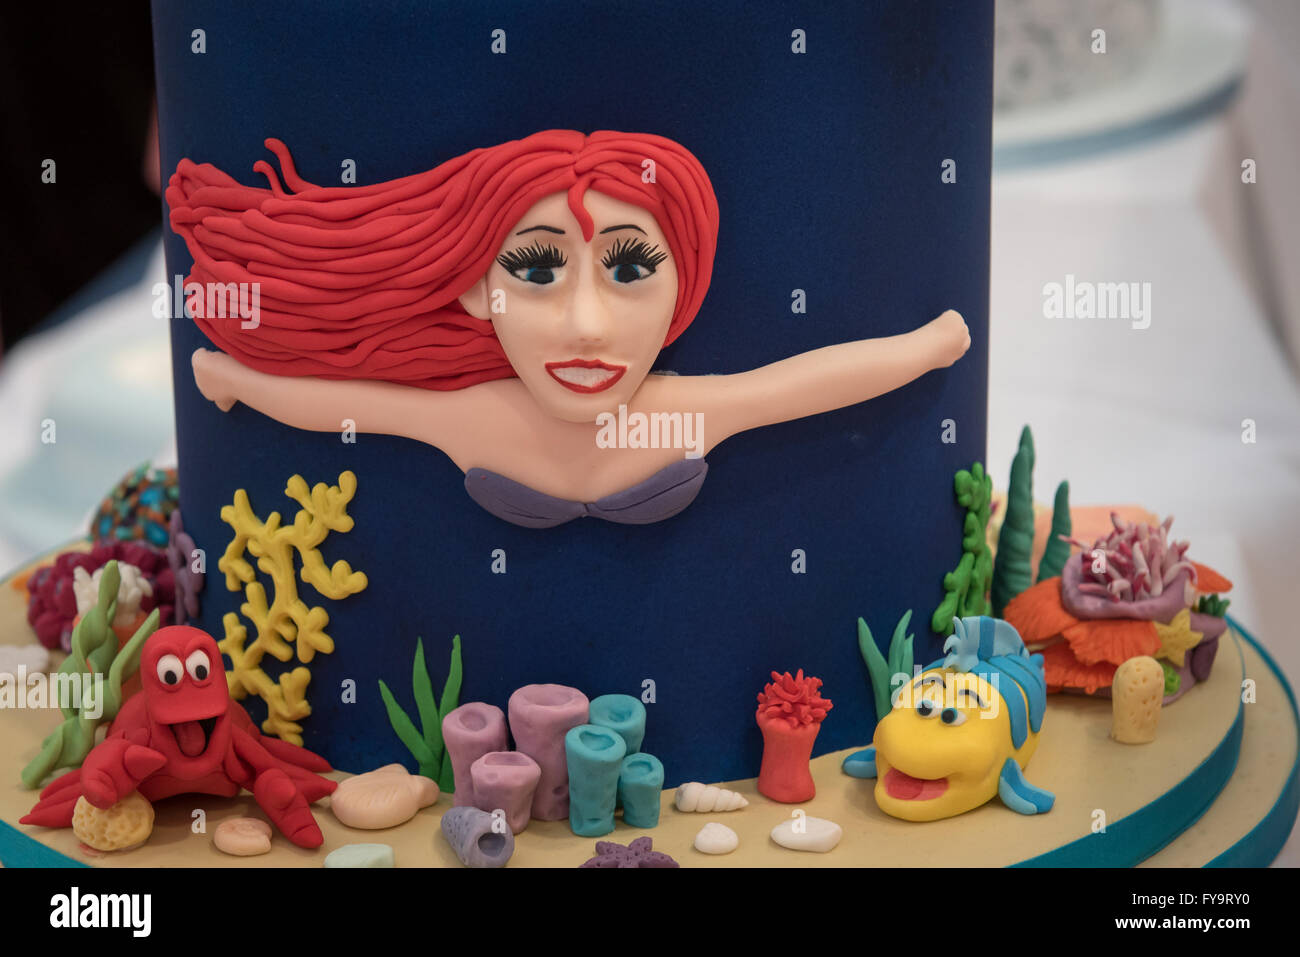 Mermaid princess Ariel birthday cake at Cake International – The Sugarcraft, Cake Decorating and Baking Show in London Stock Photo